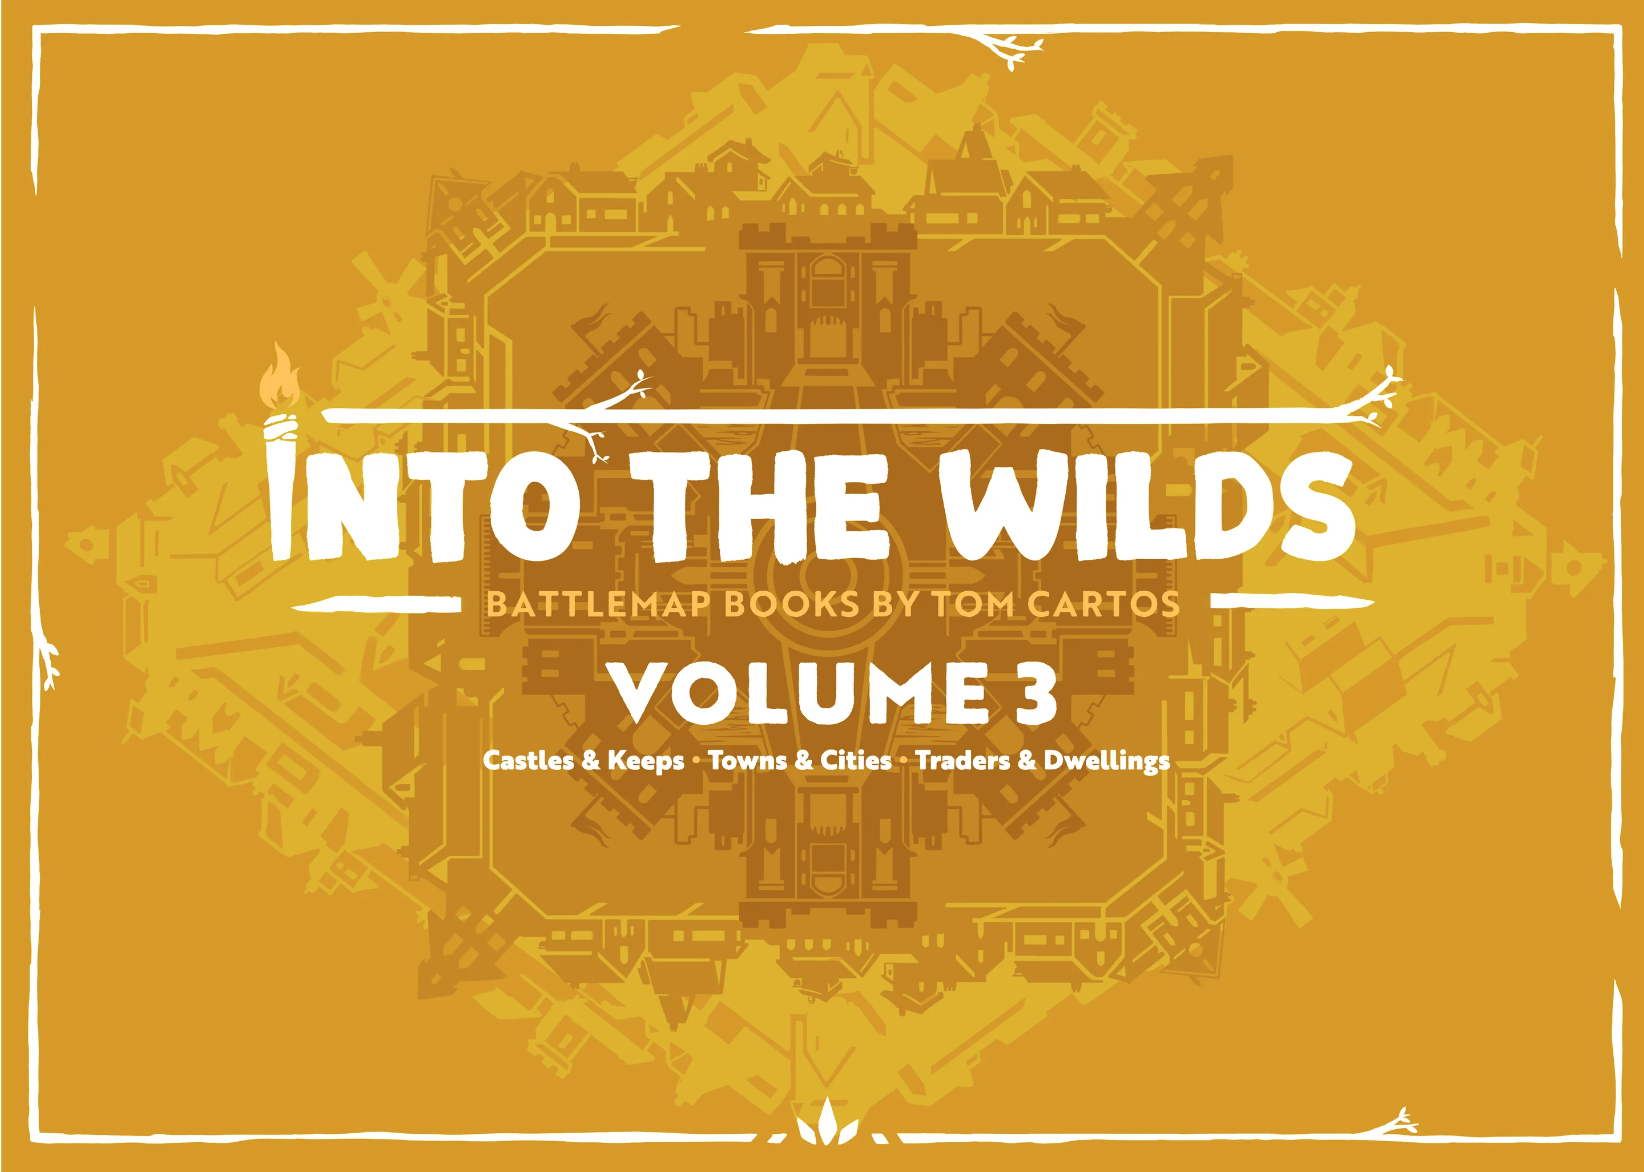 Into the Wilds Battlemap Books: Volume 3 